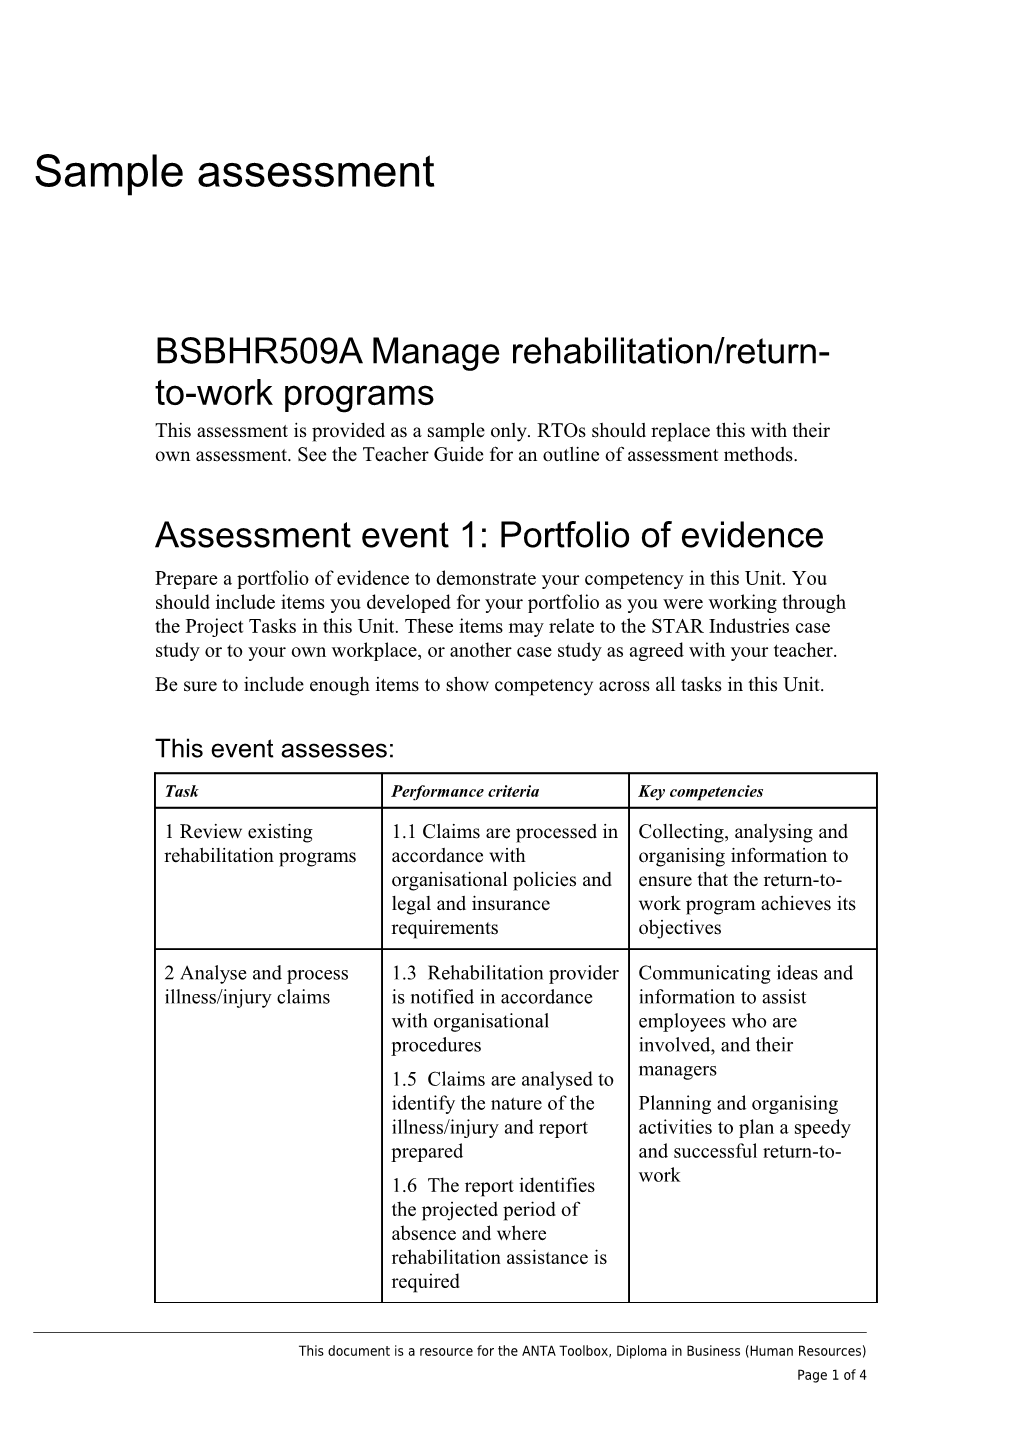 BSBHR509A Manage Rehabilitation/Return-To-Work Programs